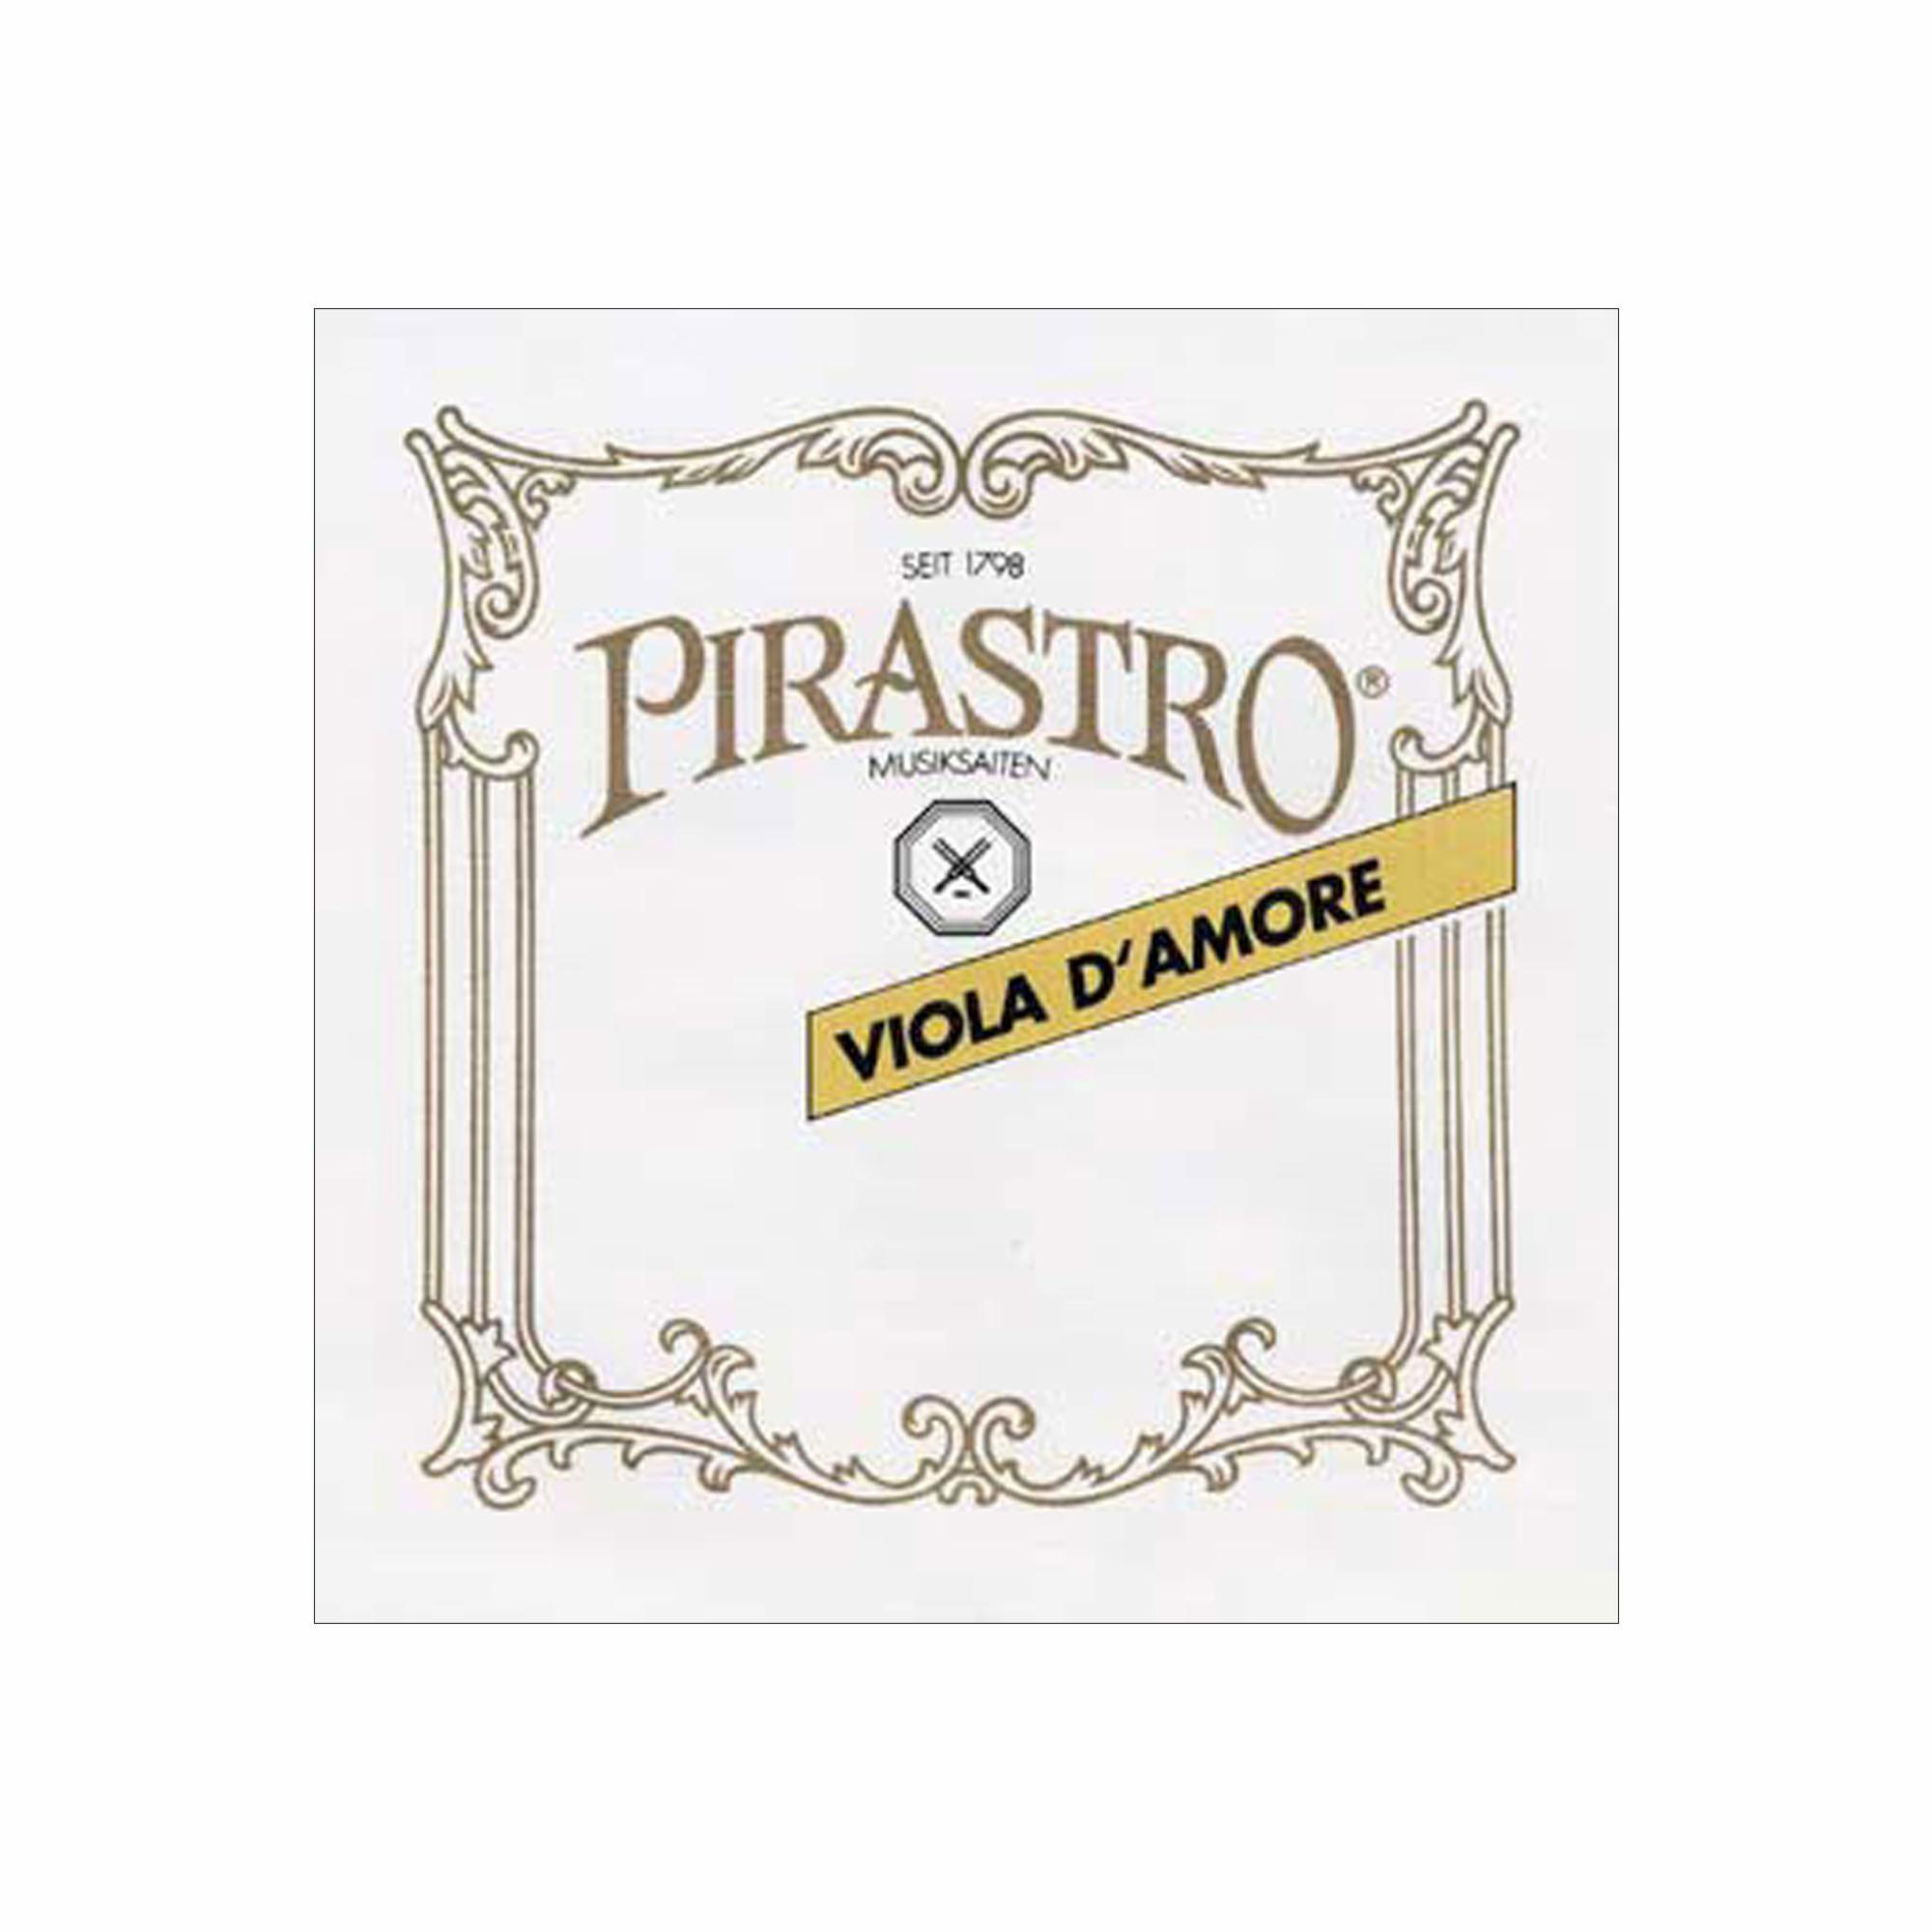 Pirastro Viola D'Amore Strings